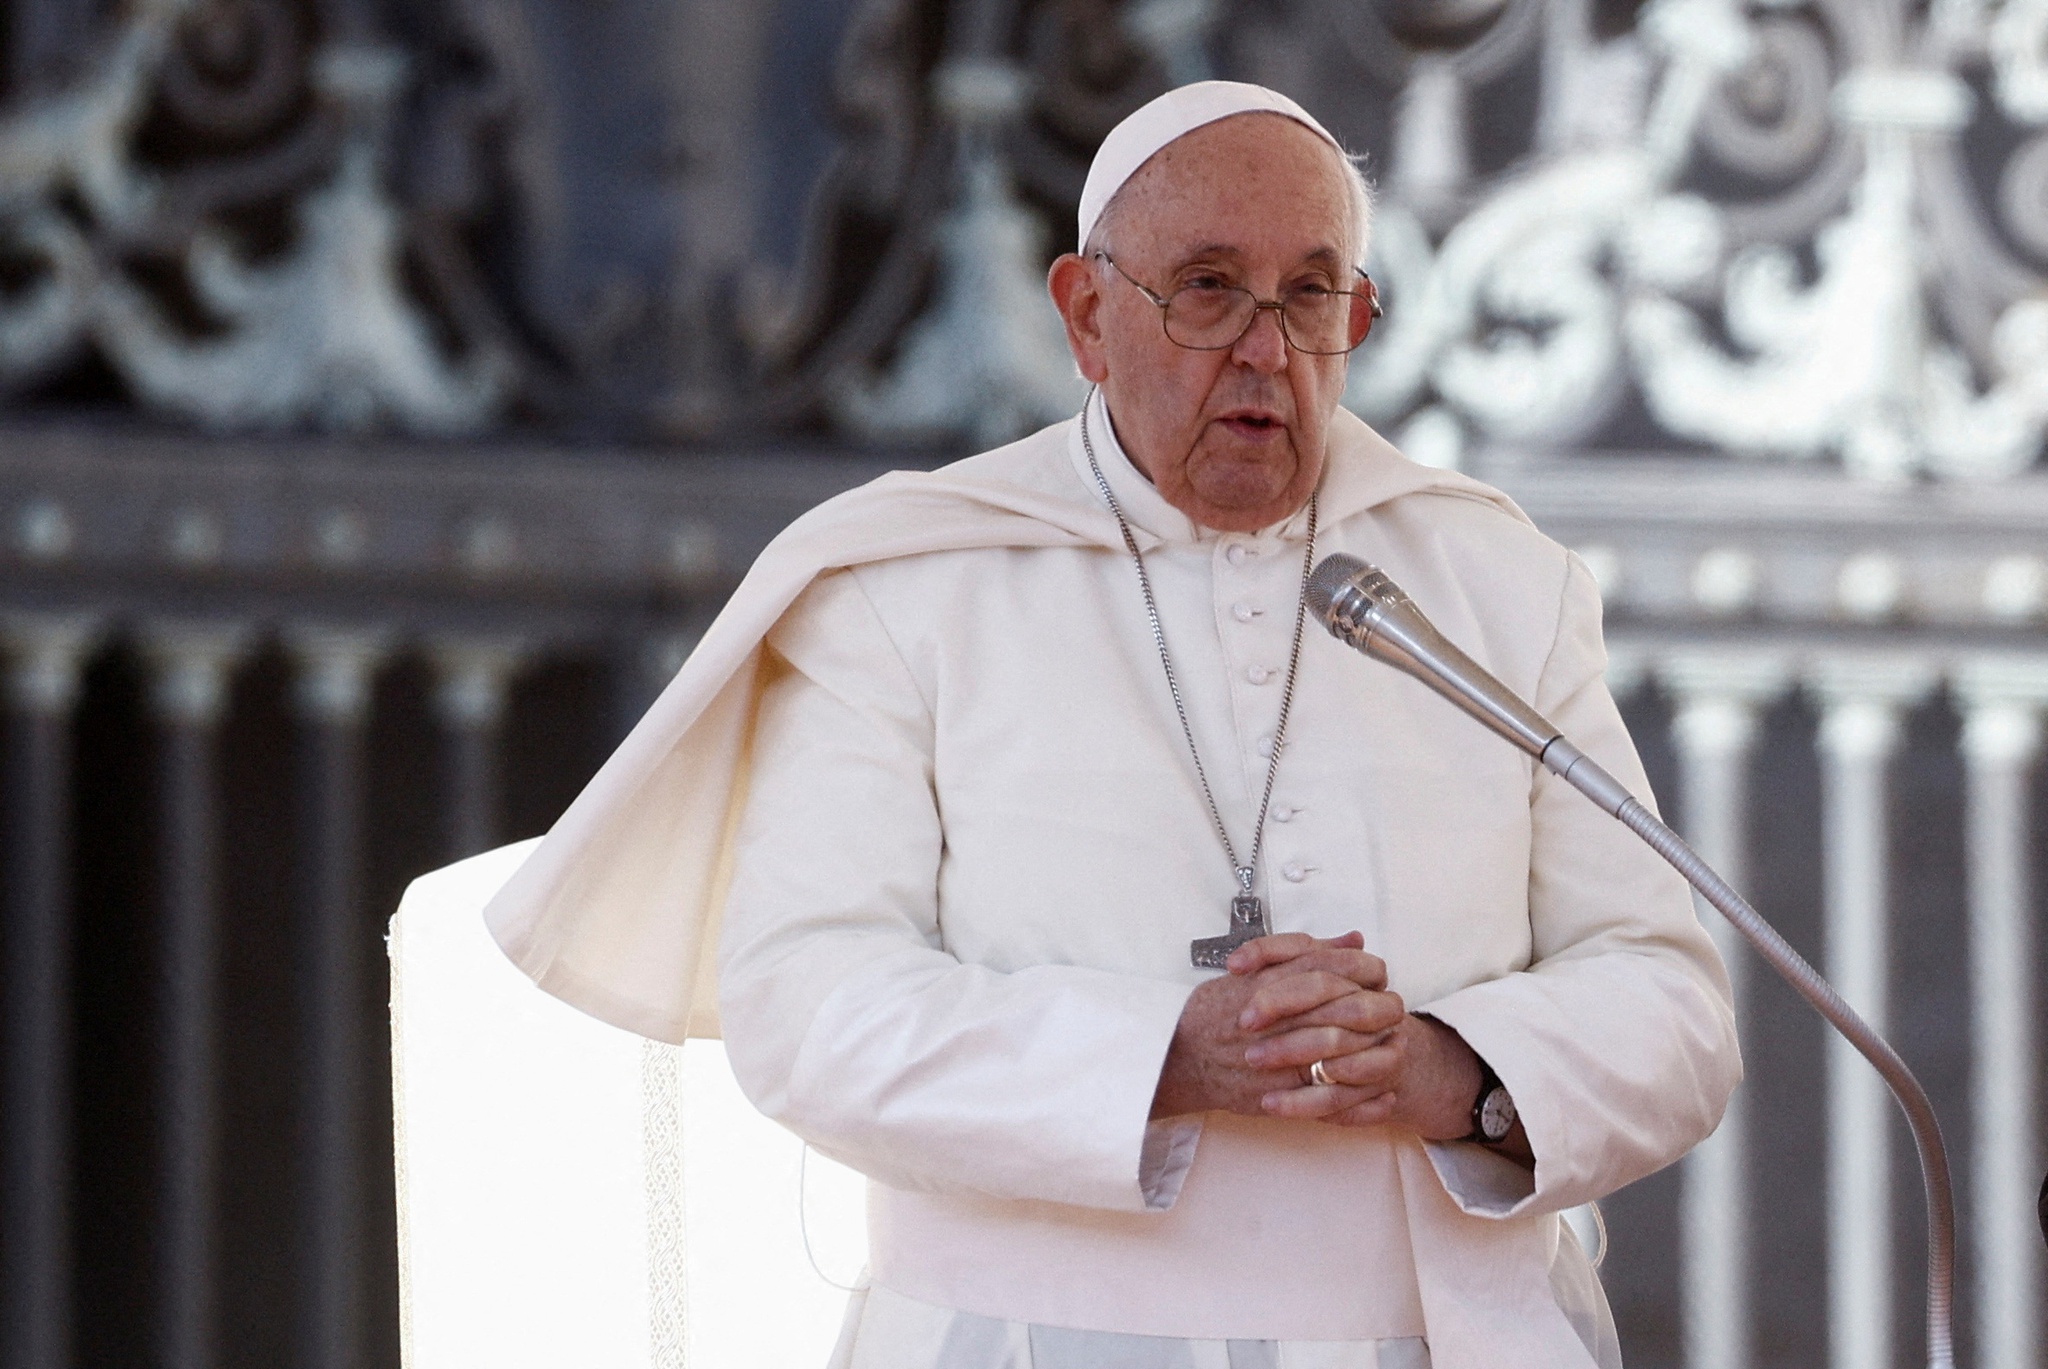 Pheeno 🏳️‍🌈 on X: Papa Francisco demite bispo conservador do